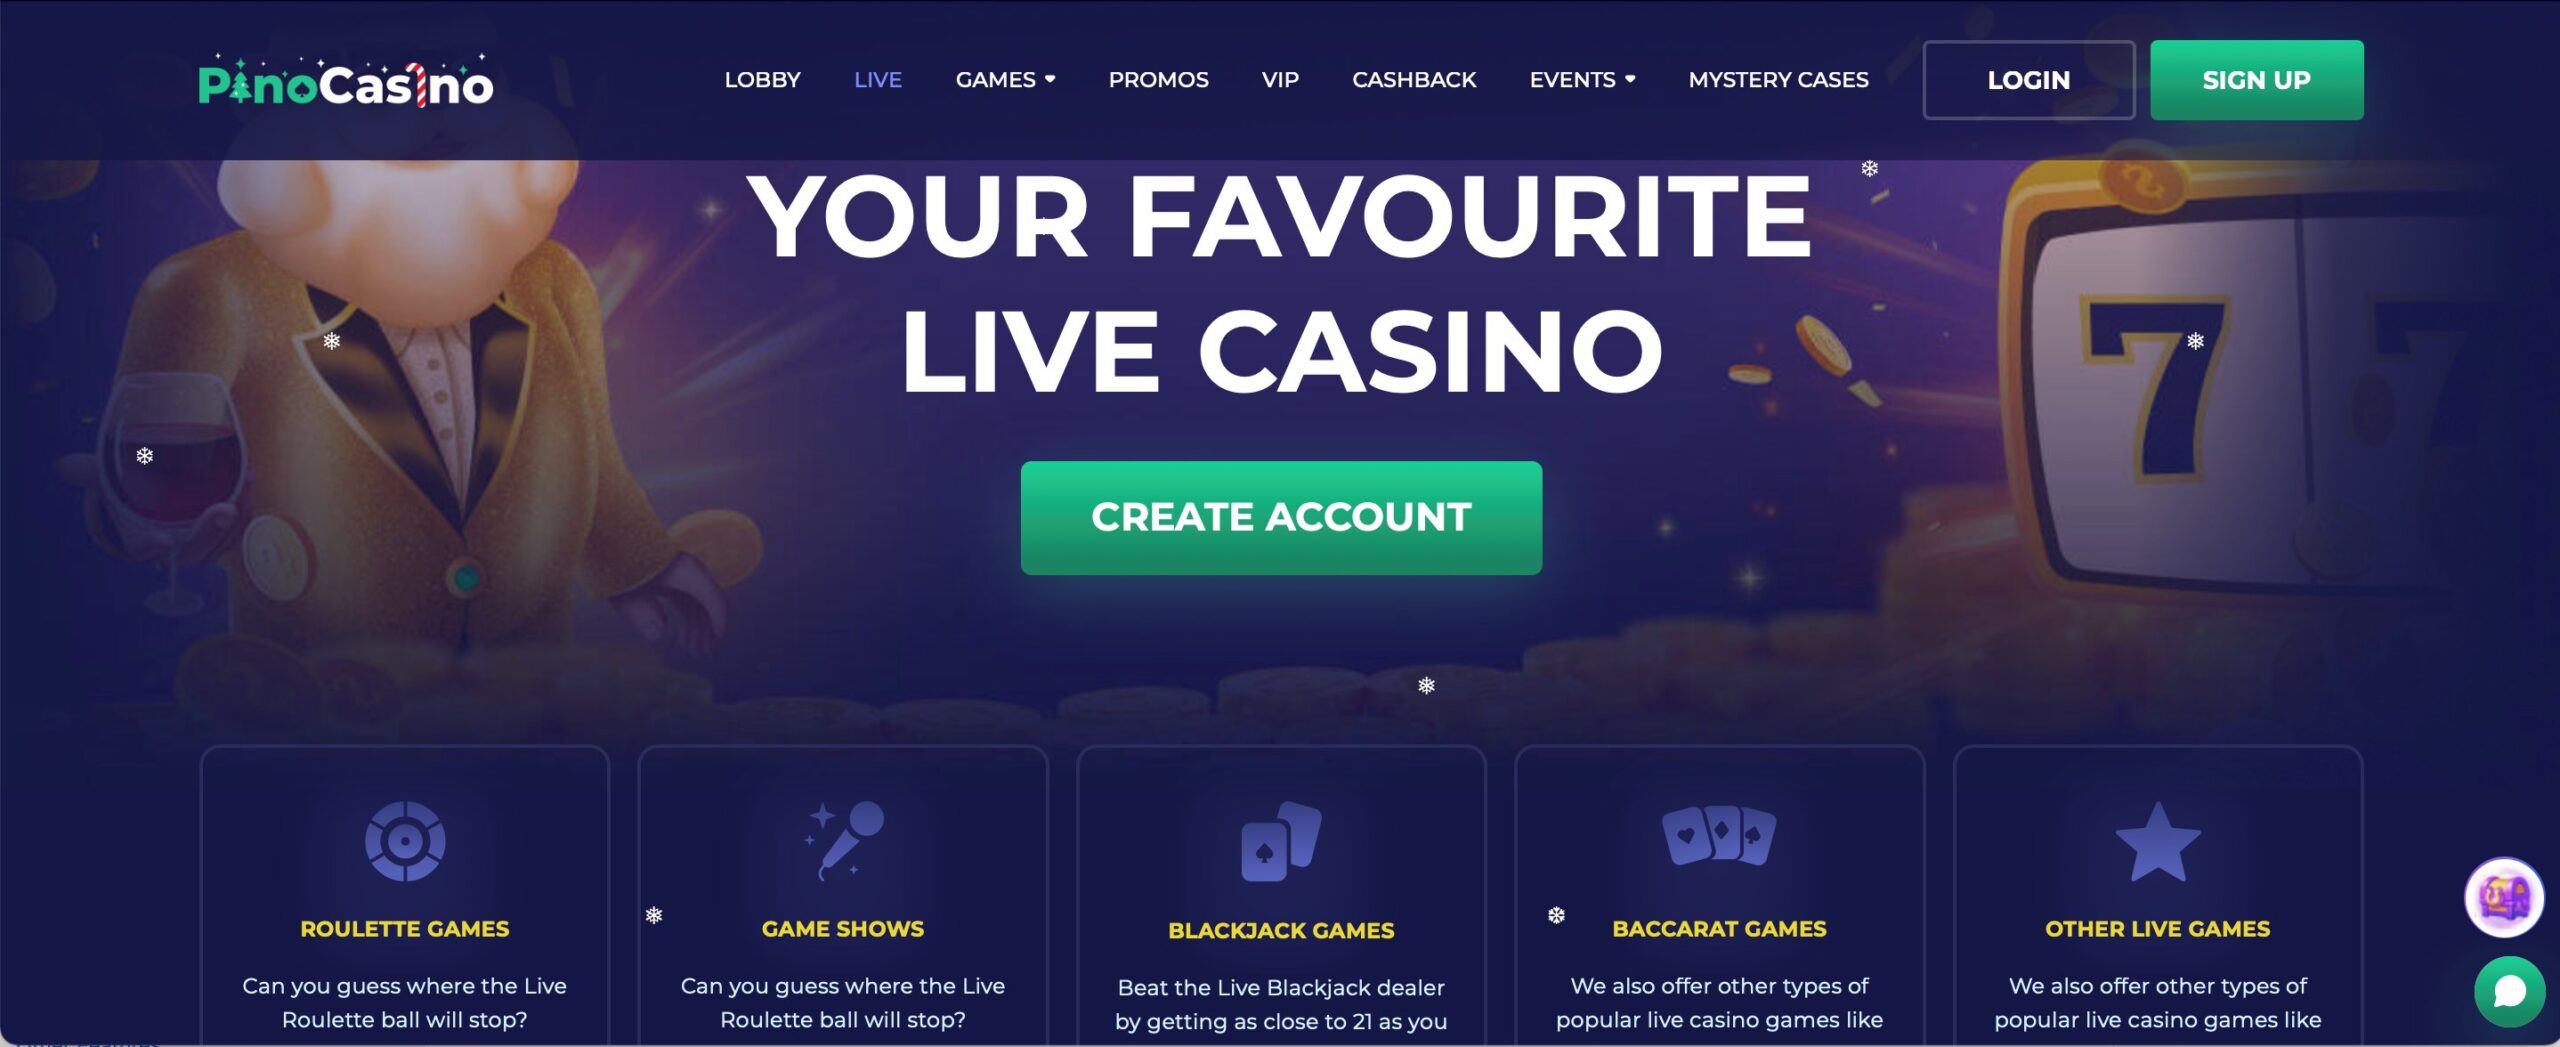 Pino Casino Live Games